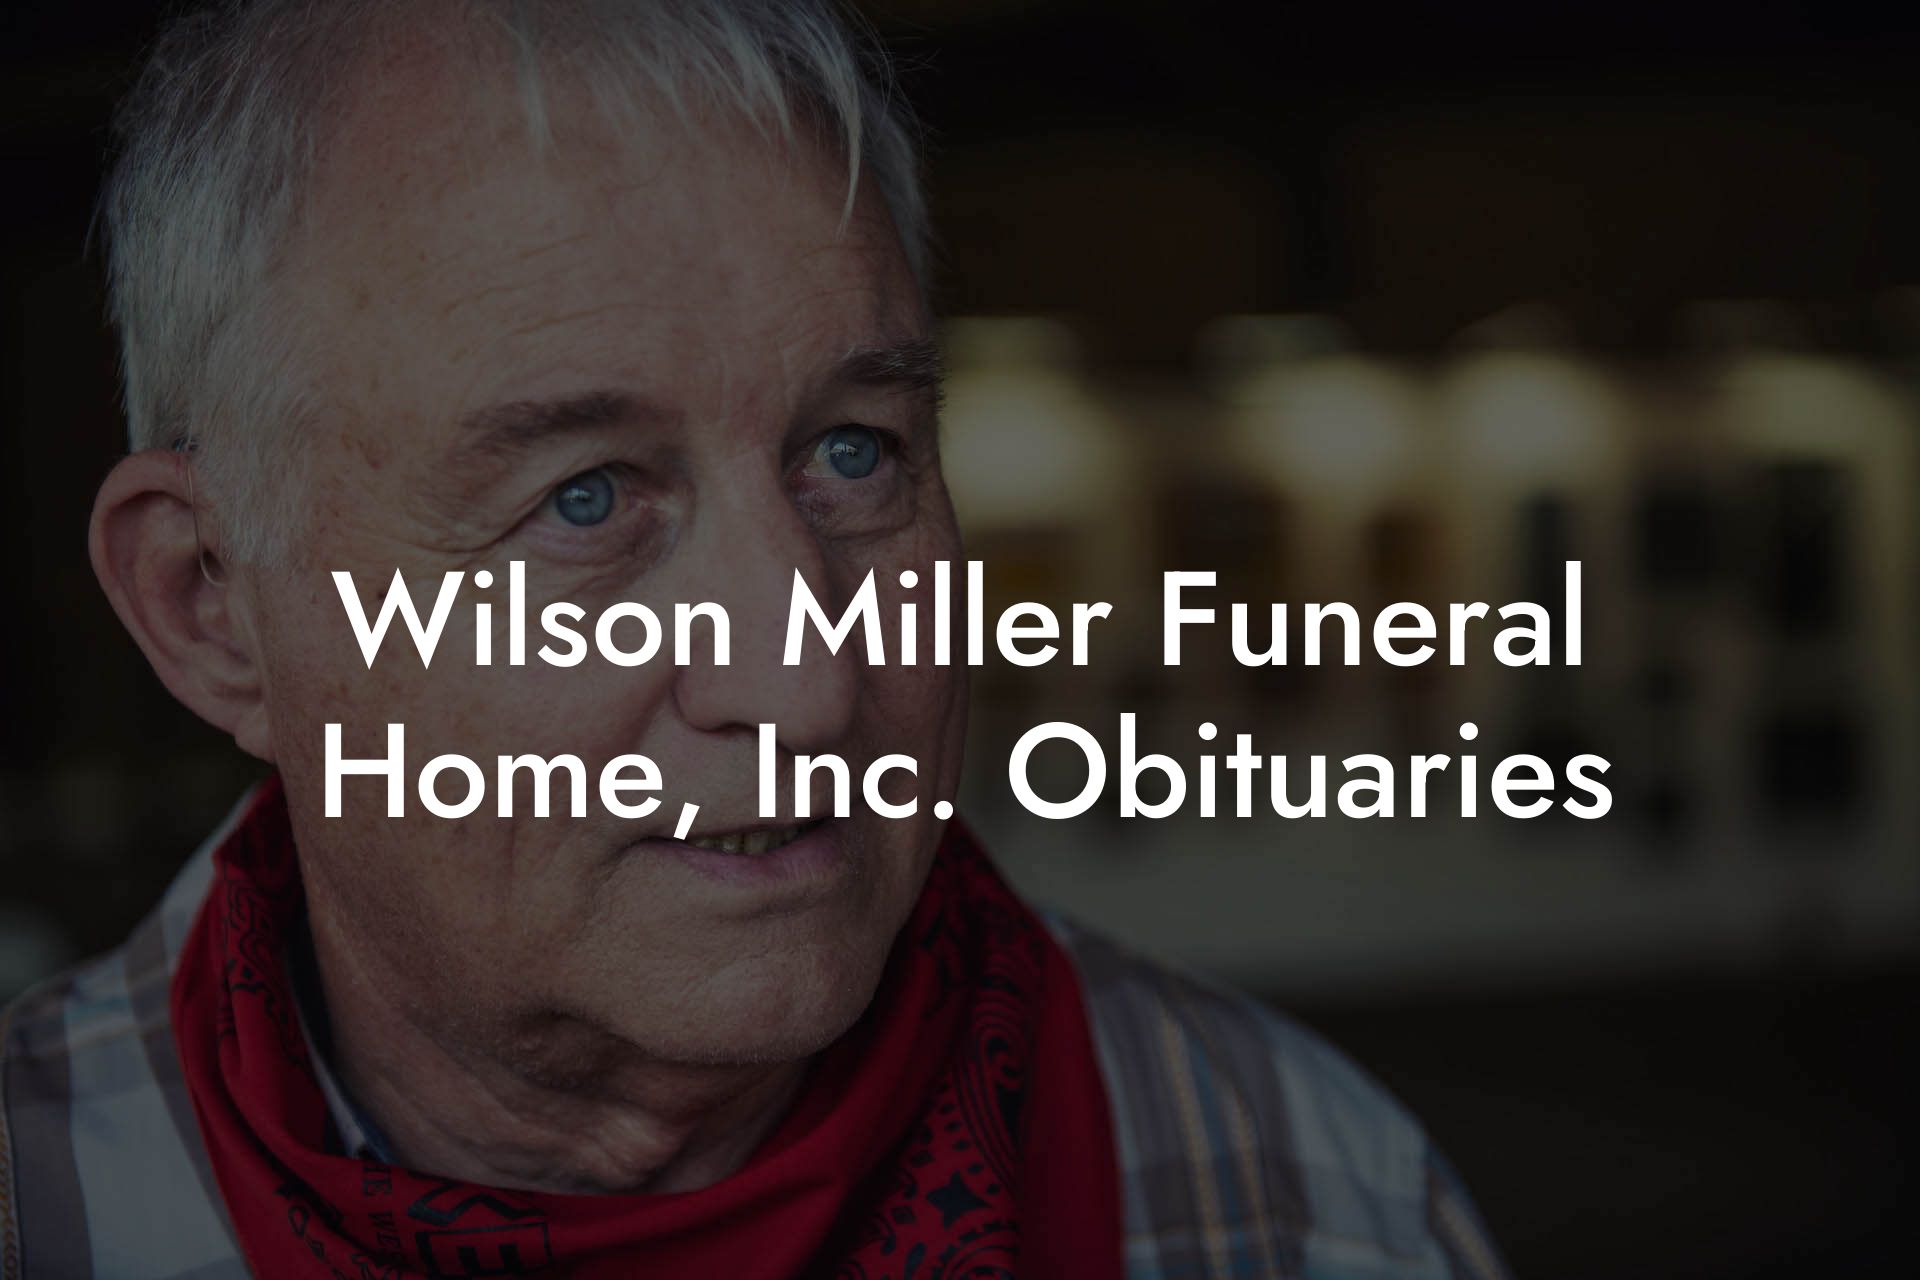 Wilson Miller Funeral Home, Inc. Obituaries